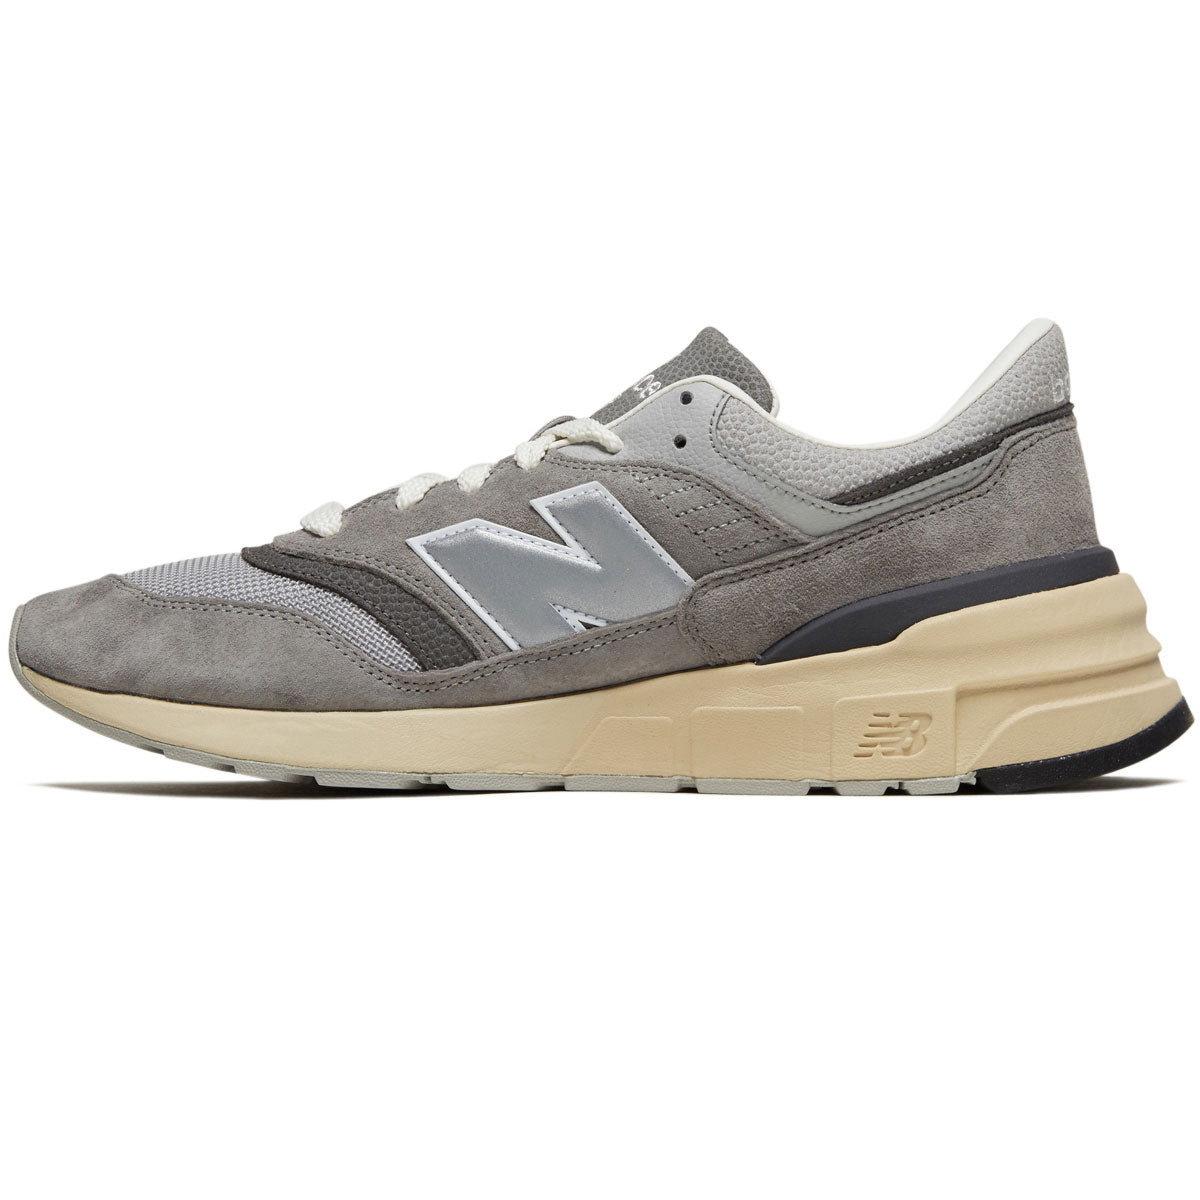 New Balance 997R Shoes - Shadow Grey/Rain Cloud image 2